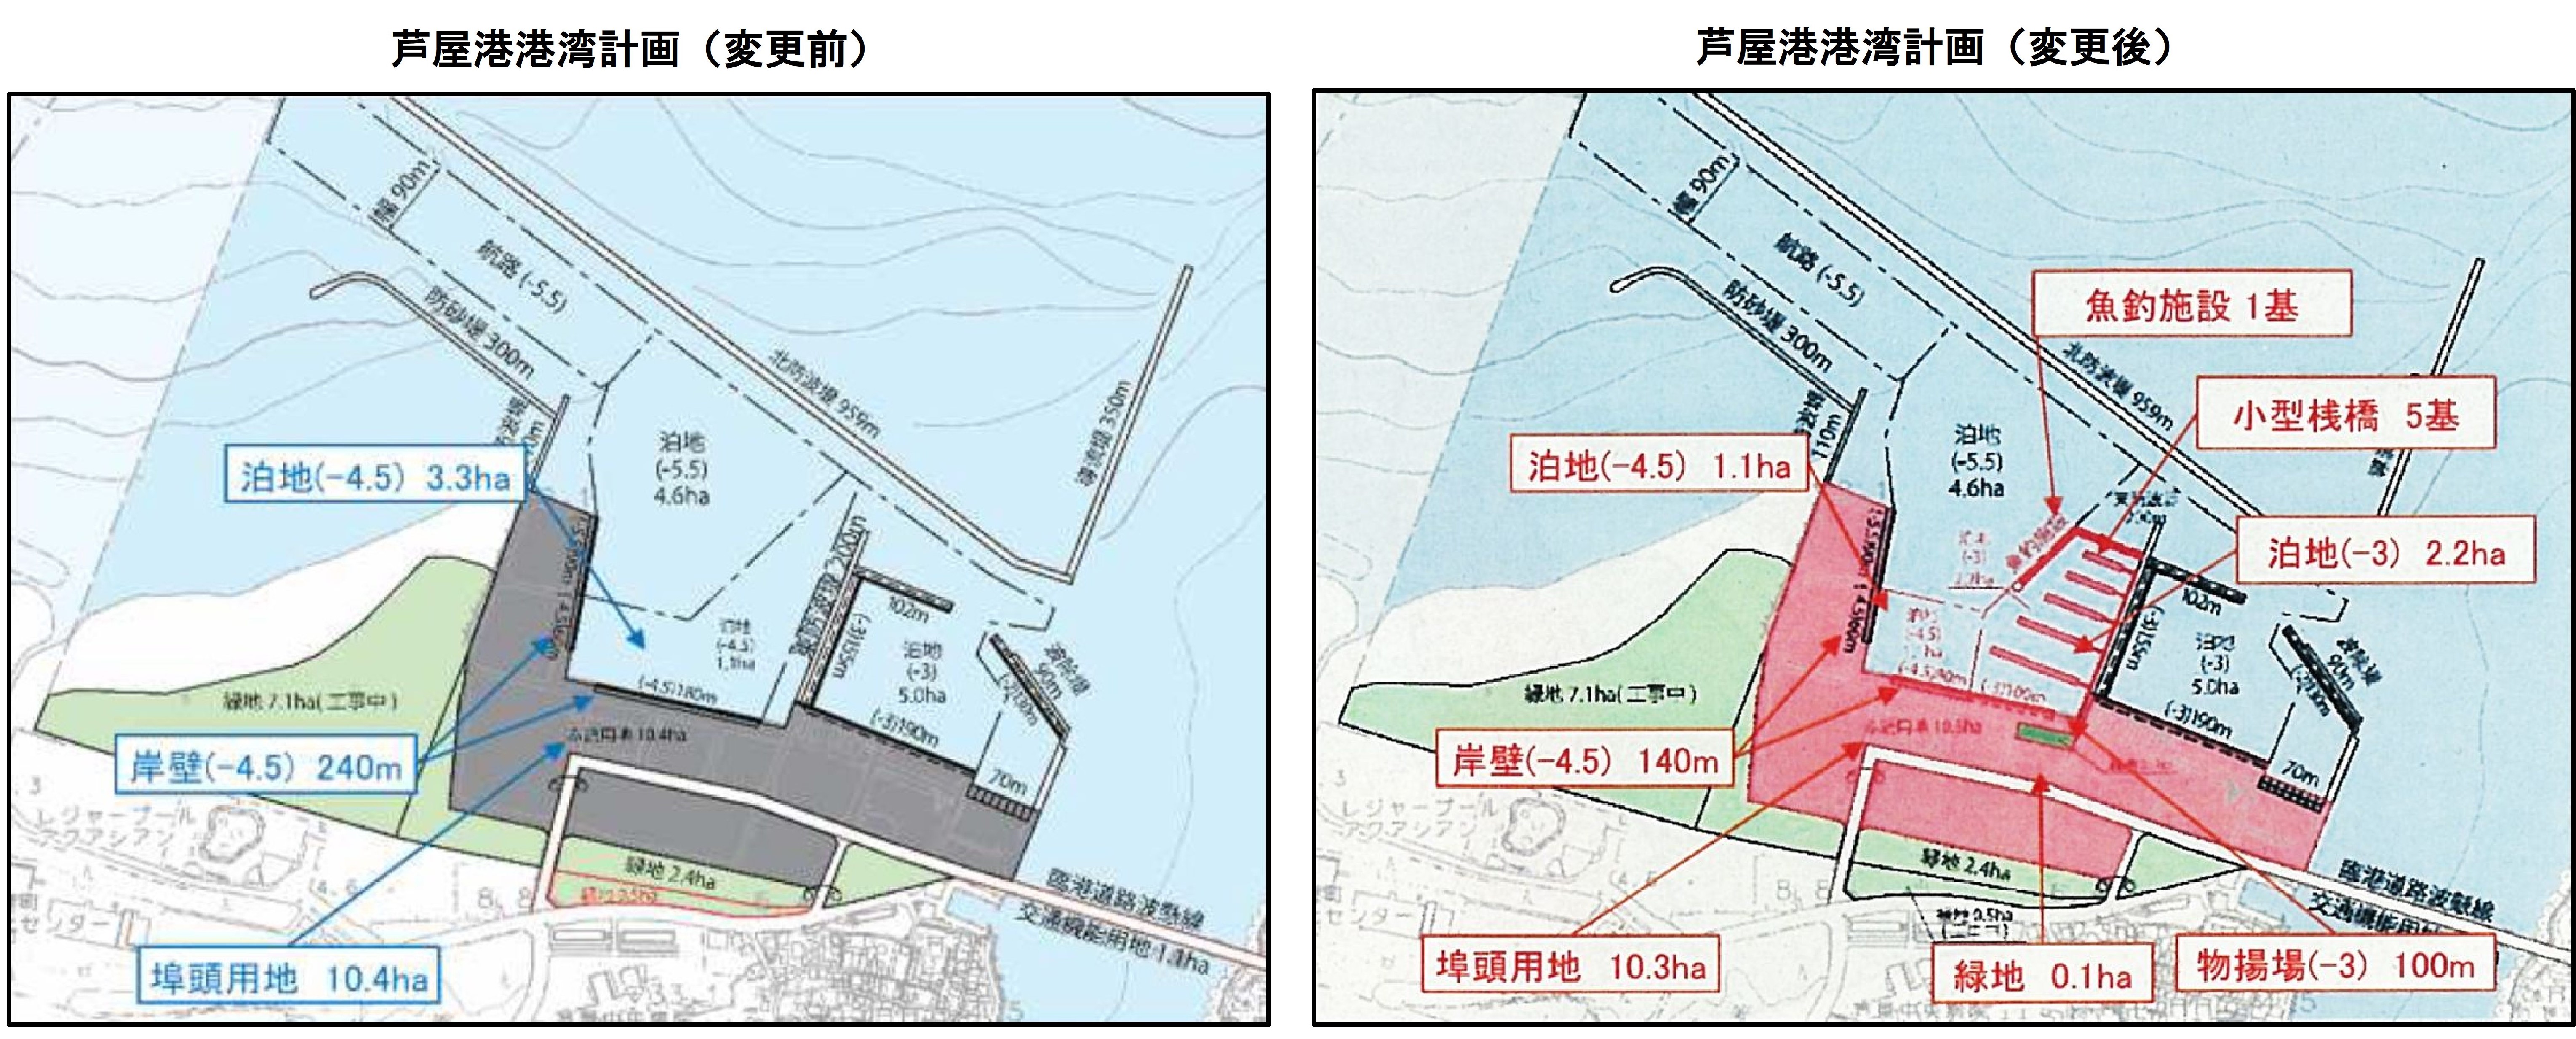 芦屋港港湾計変更前と変更後の比較図面